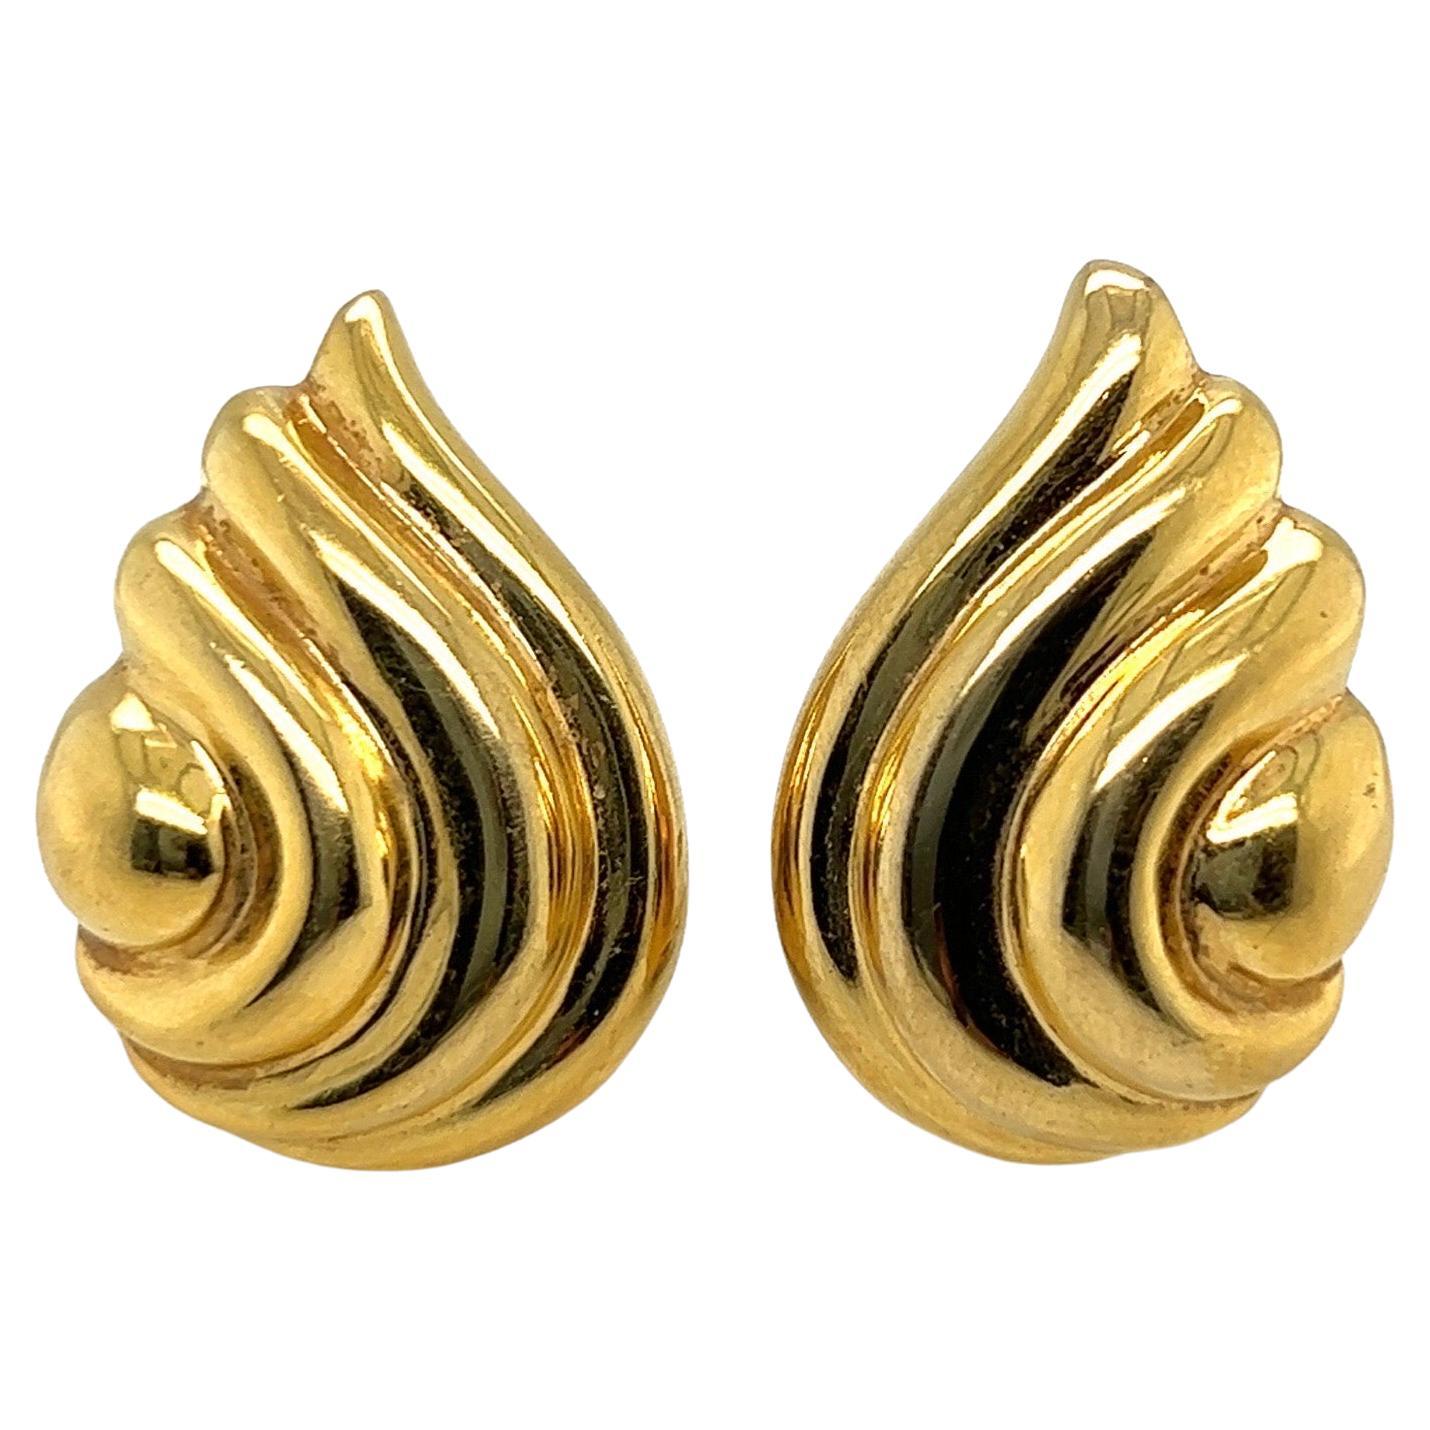 18 Karat Yellow Gold Earrings by Verdura